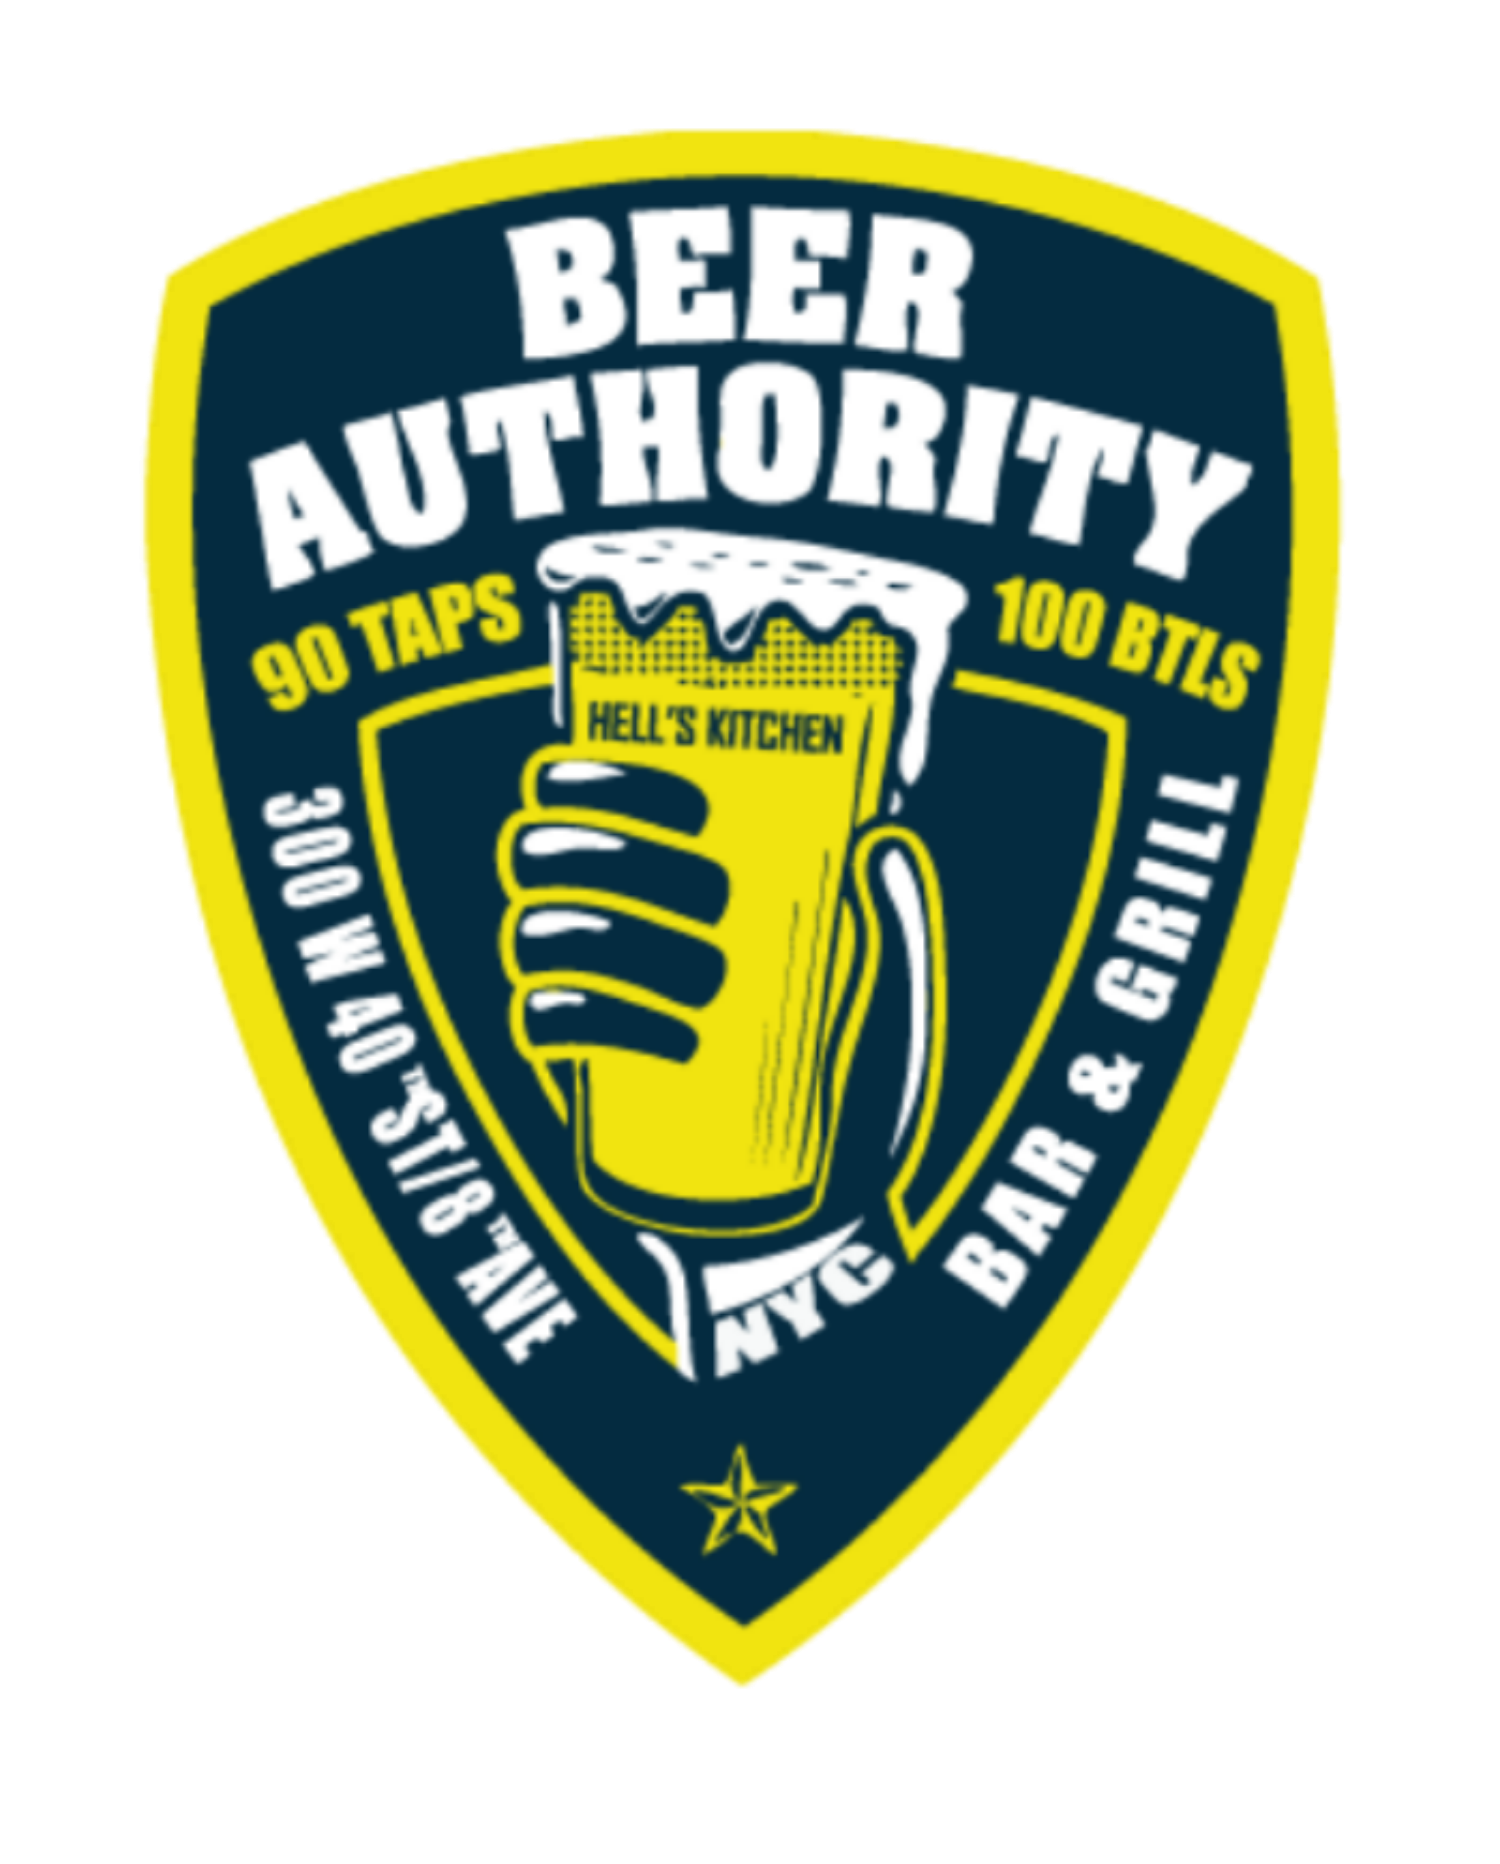 Beer List Beer Authority Nyc